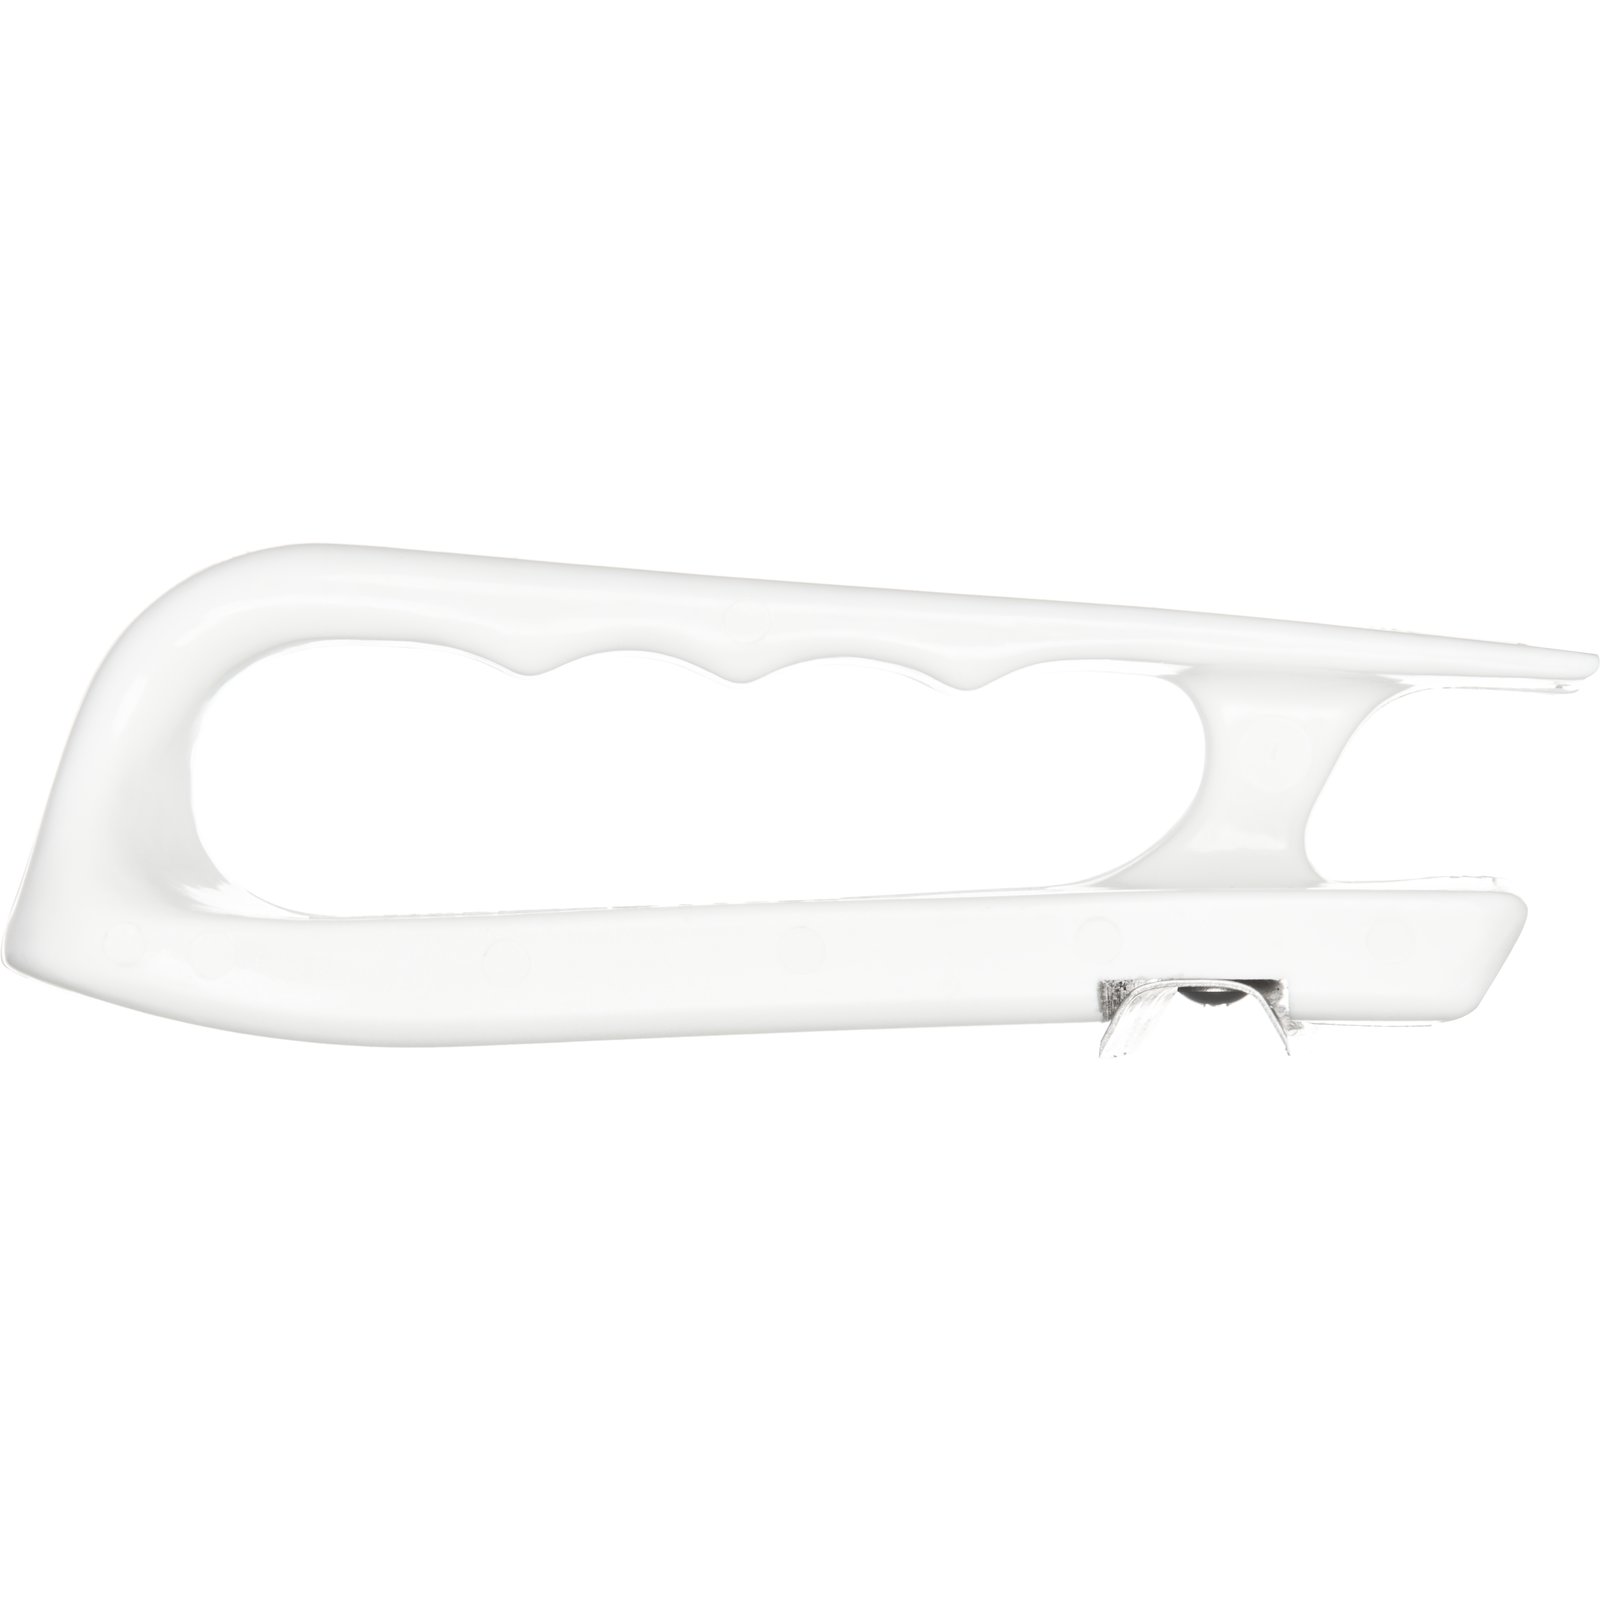 Cater Basix Nylon Cutting Board - White - 400x250x10mm - Everyshop